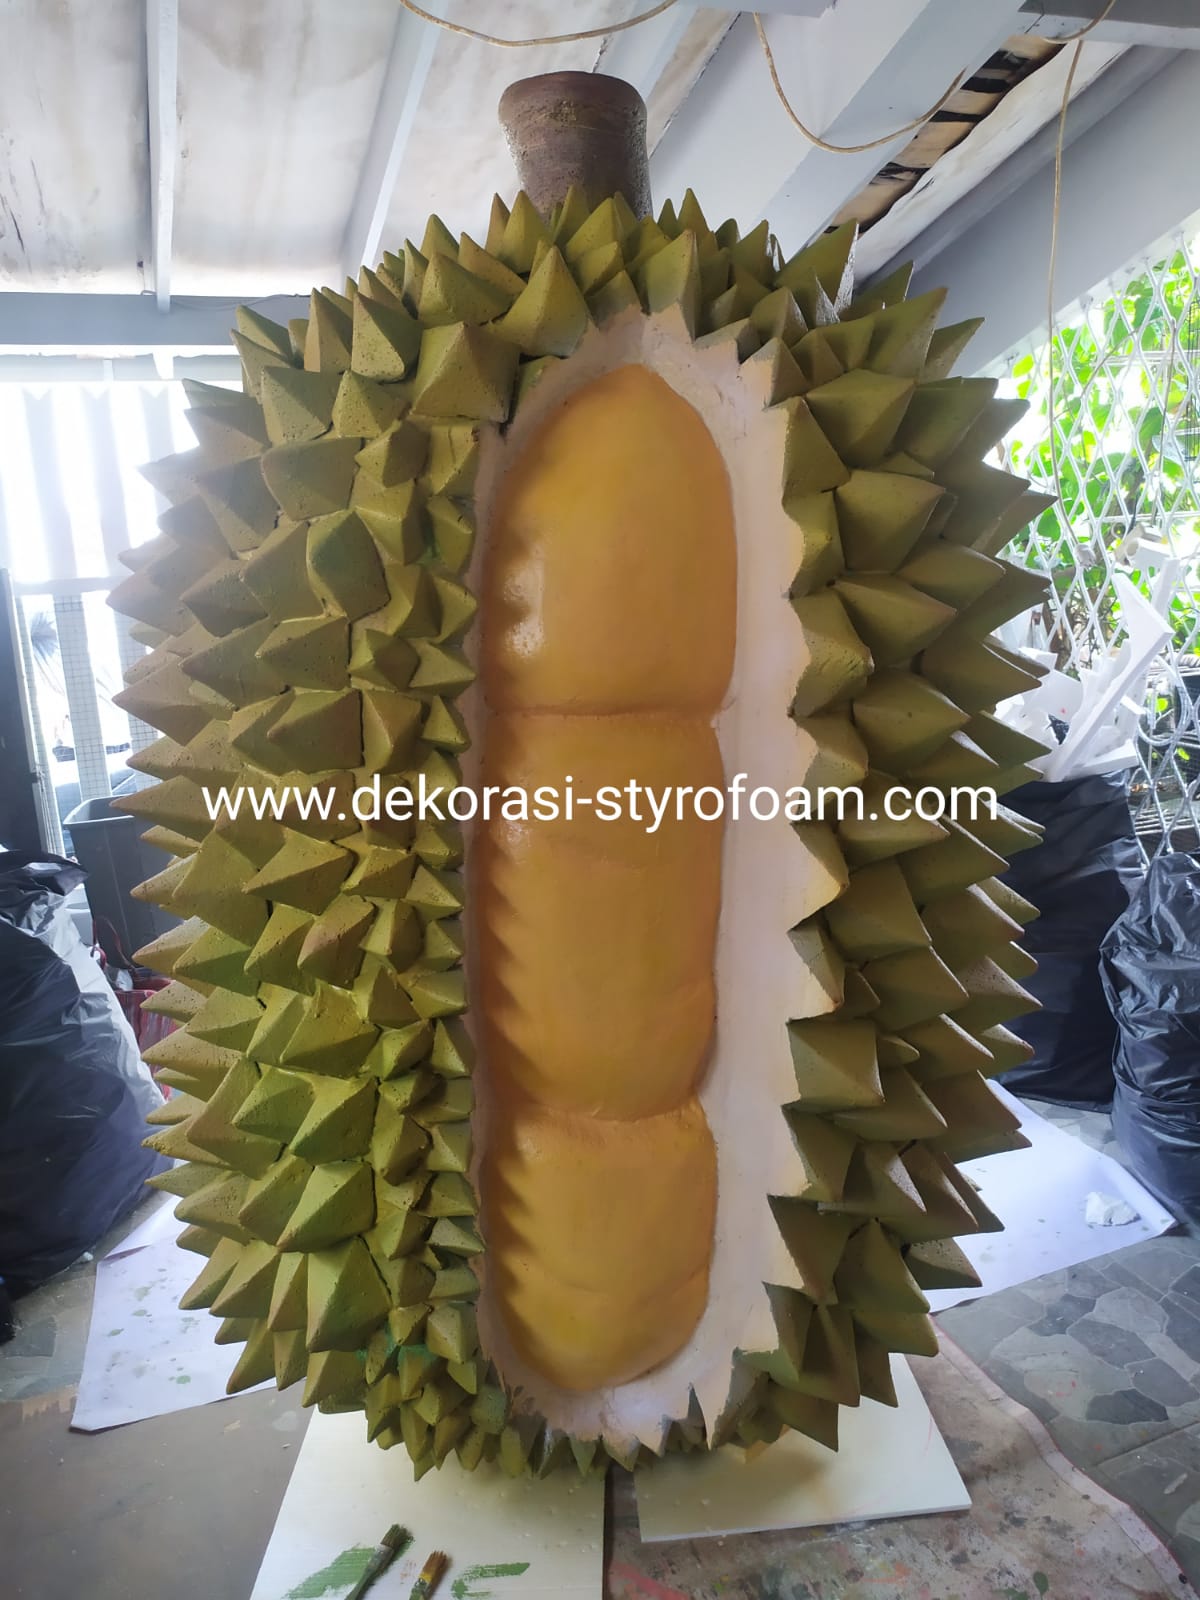 Dekorasi Styrofoam 3D Durian